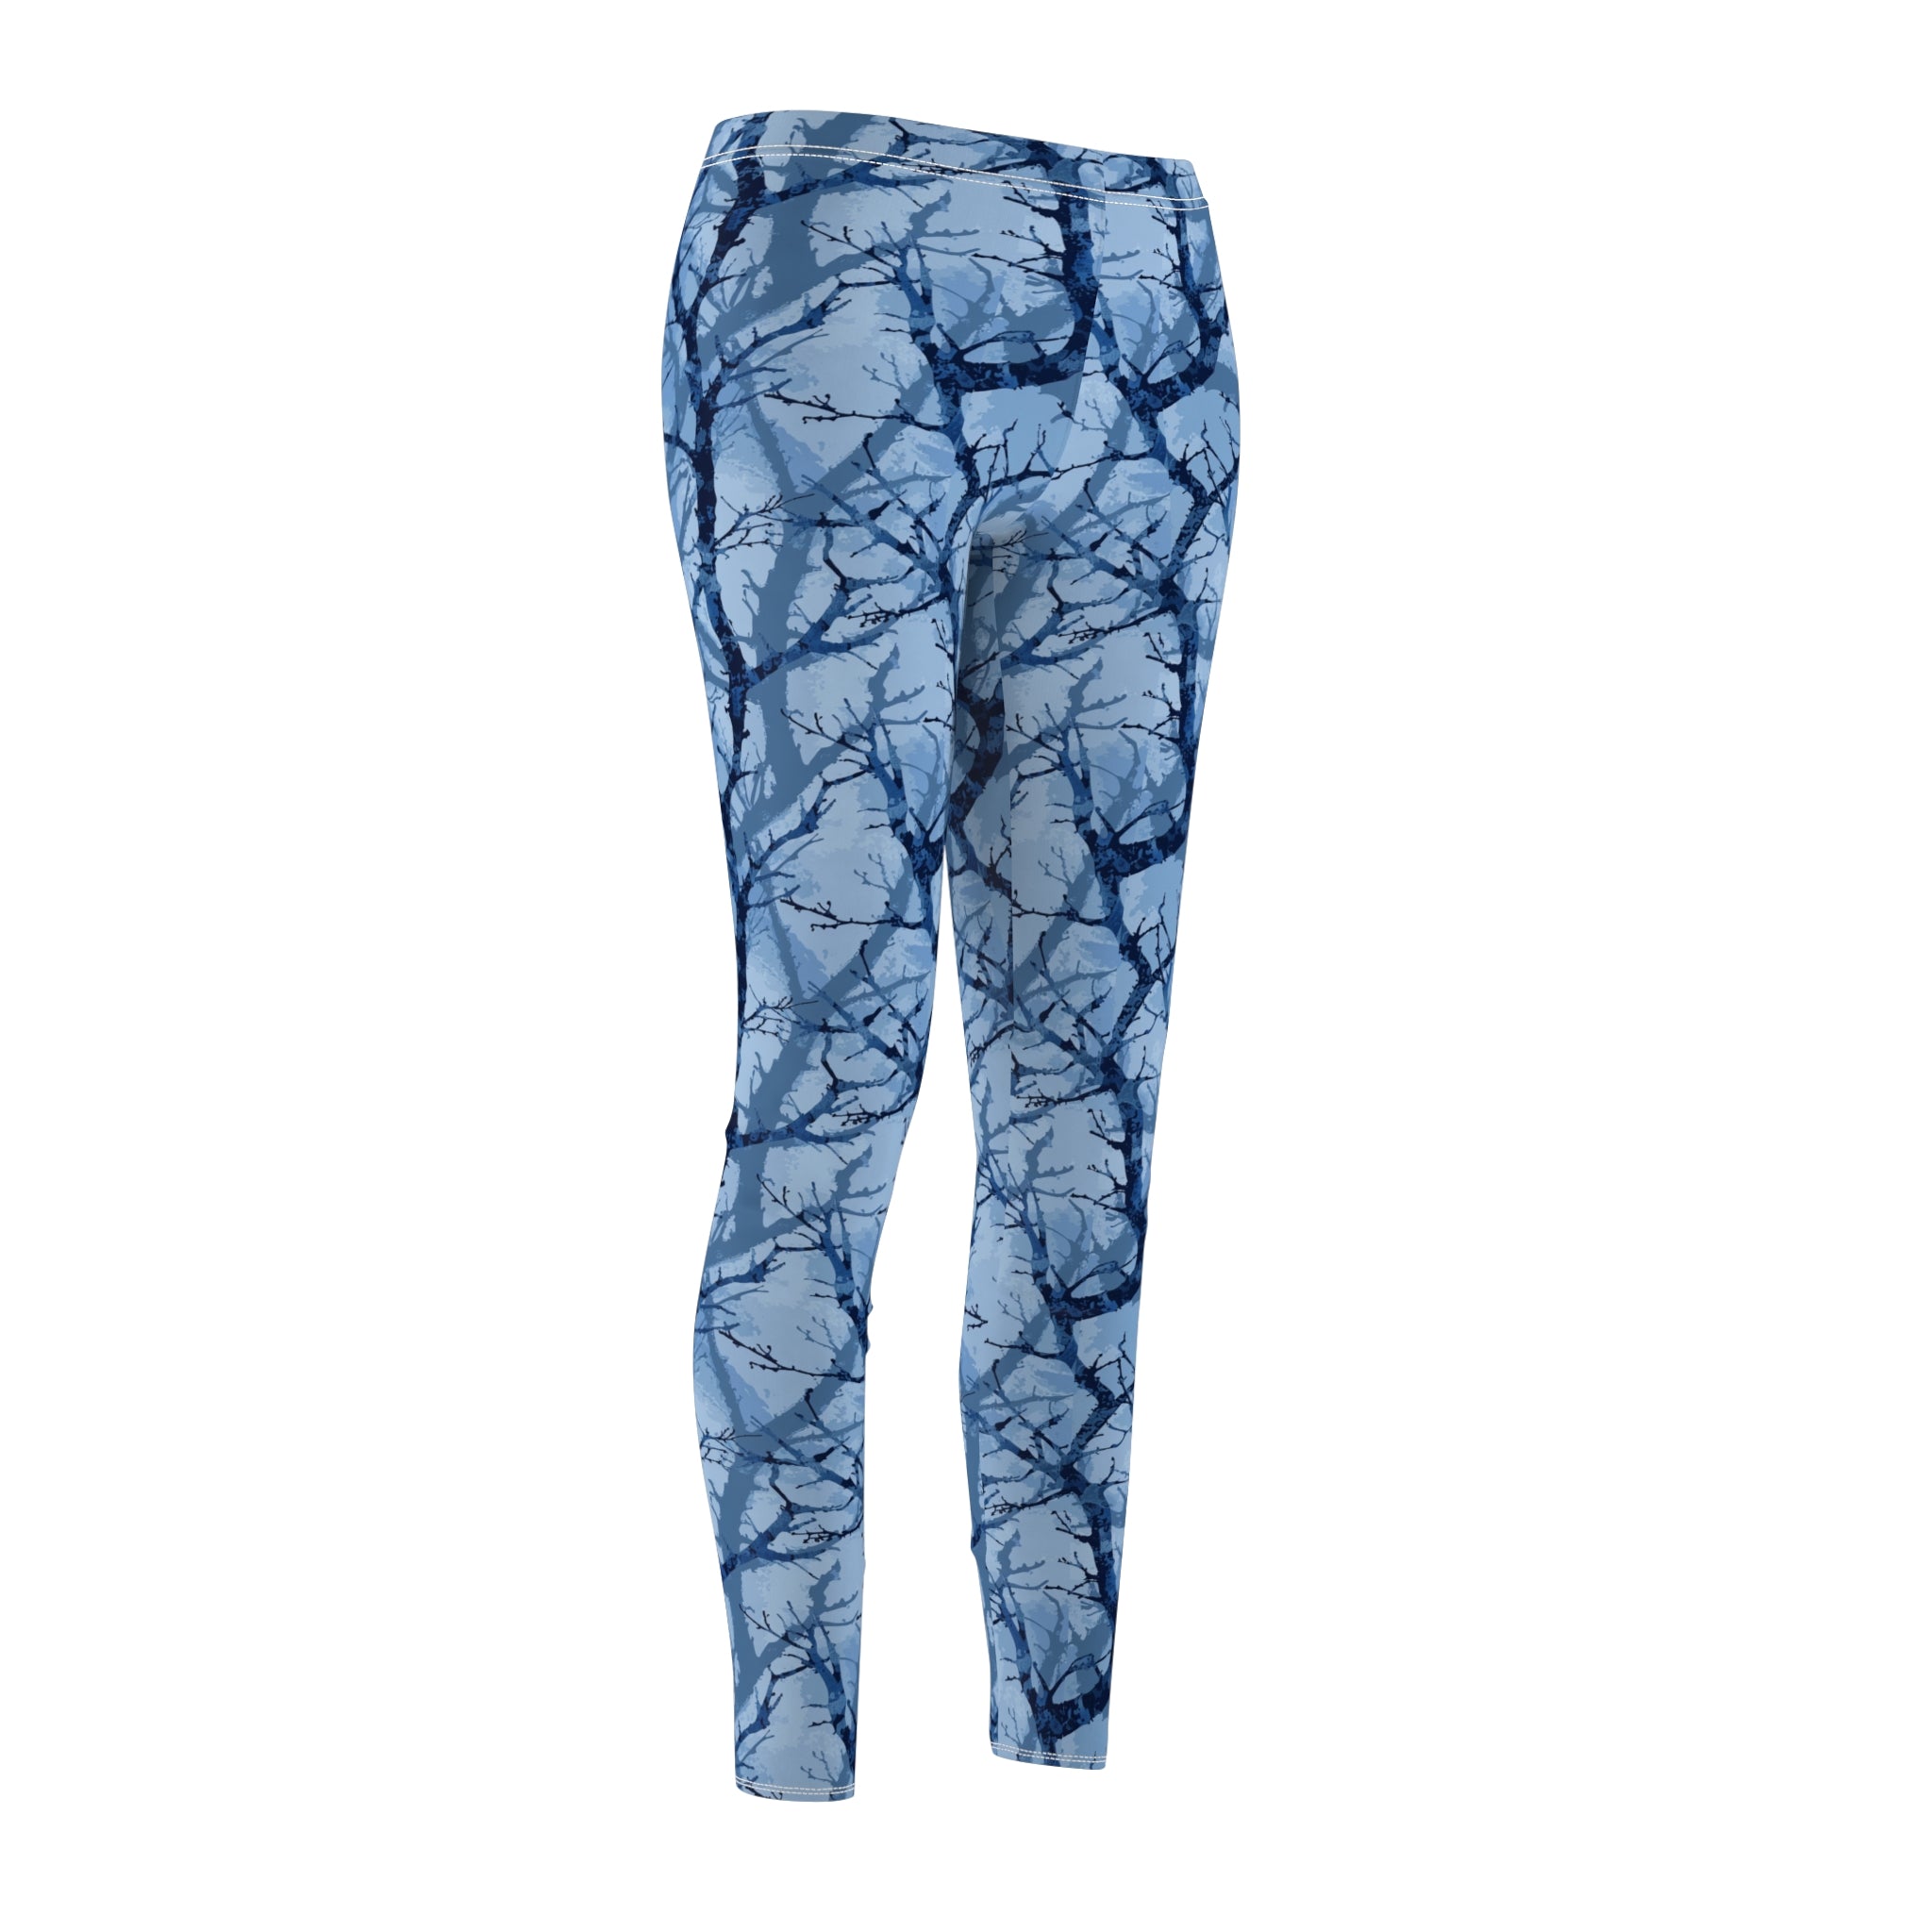 Stylish Blue Woodland Camo Leggings for Active Women